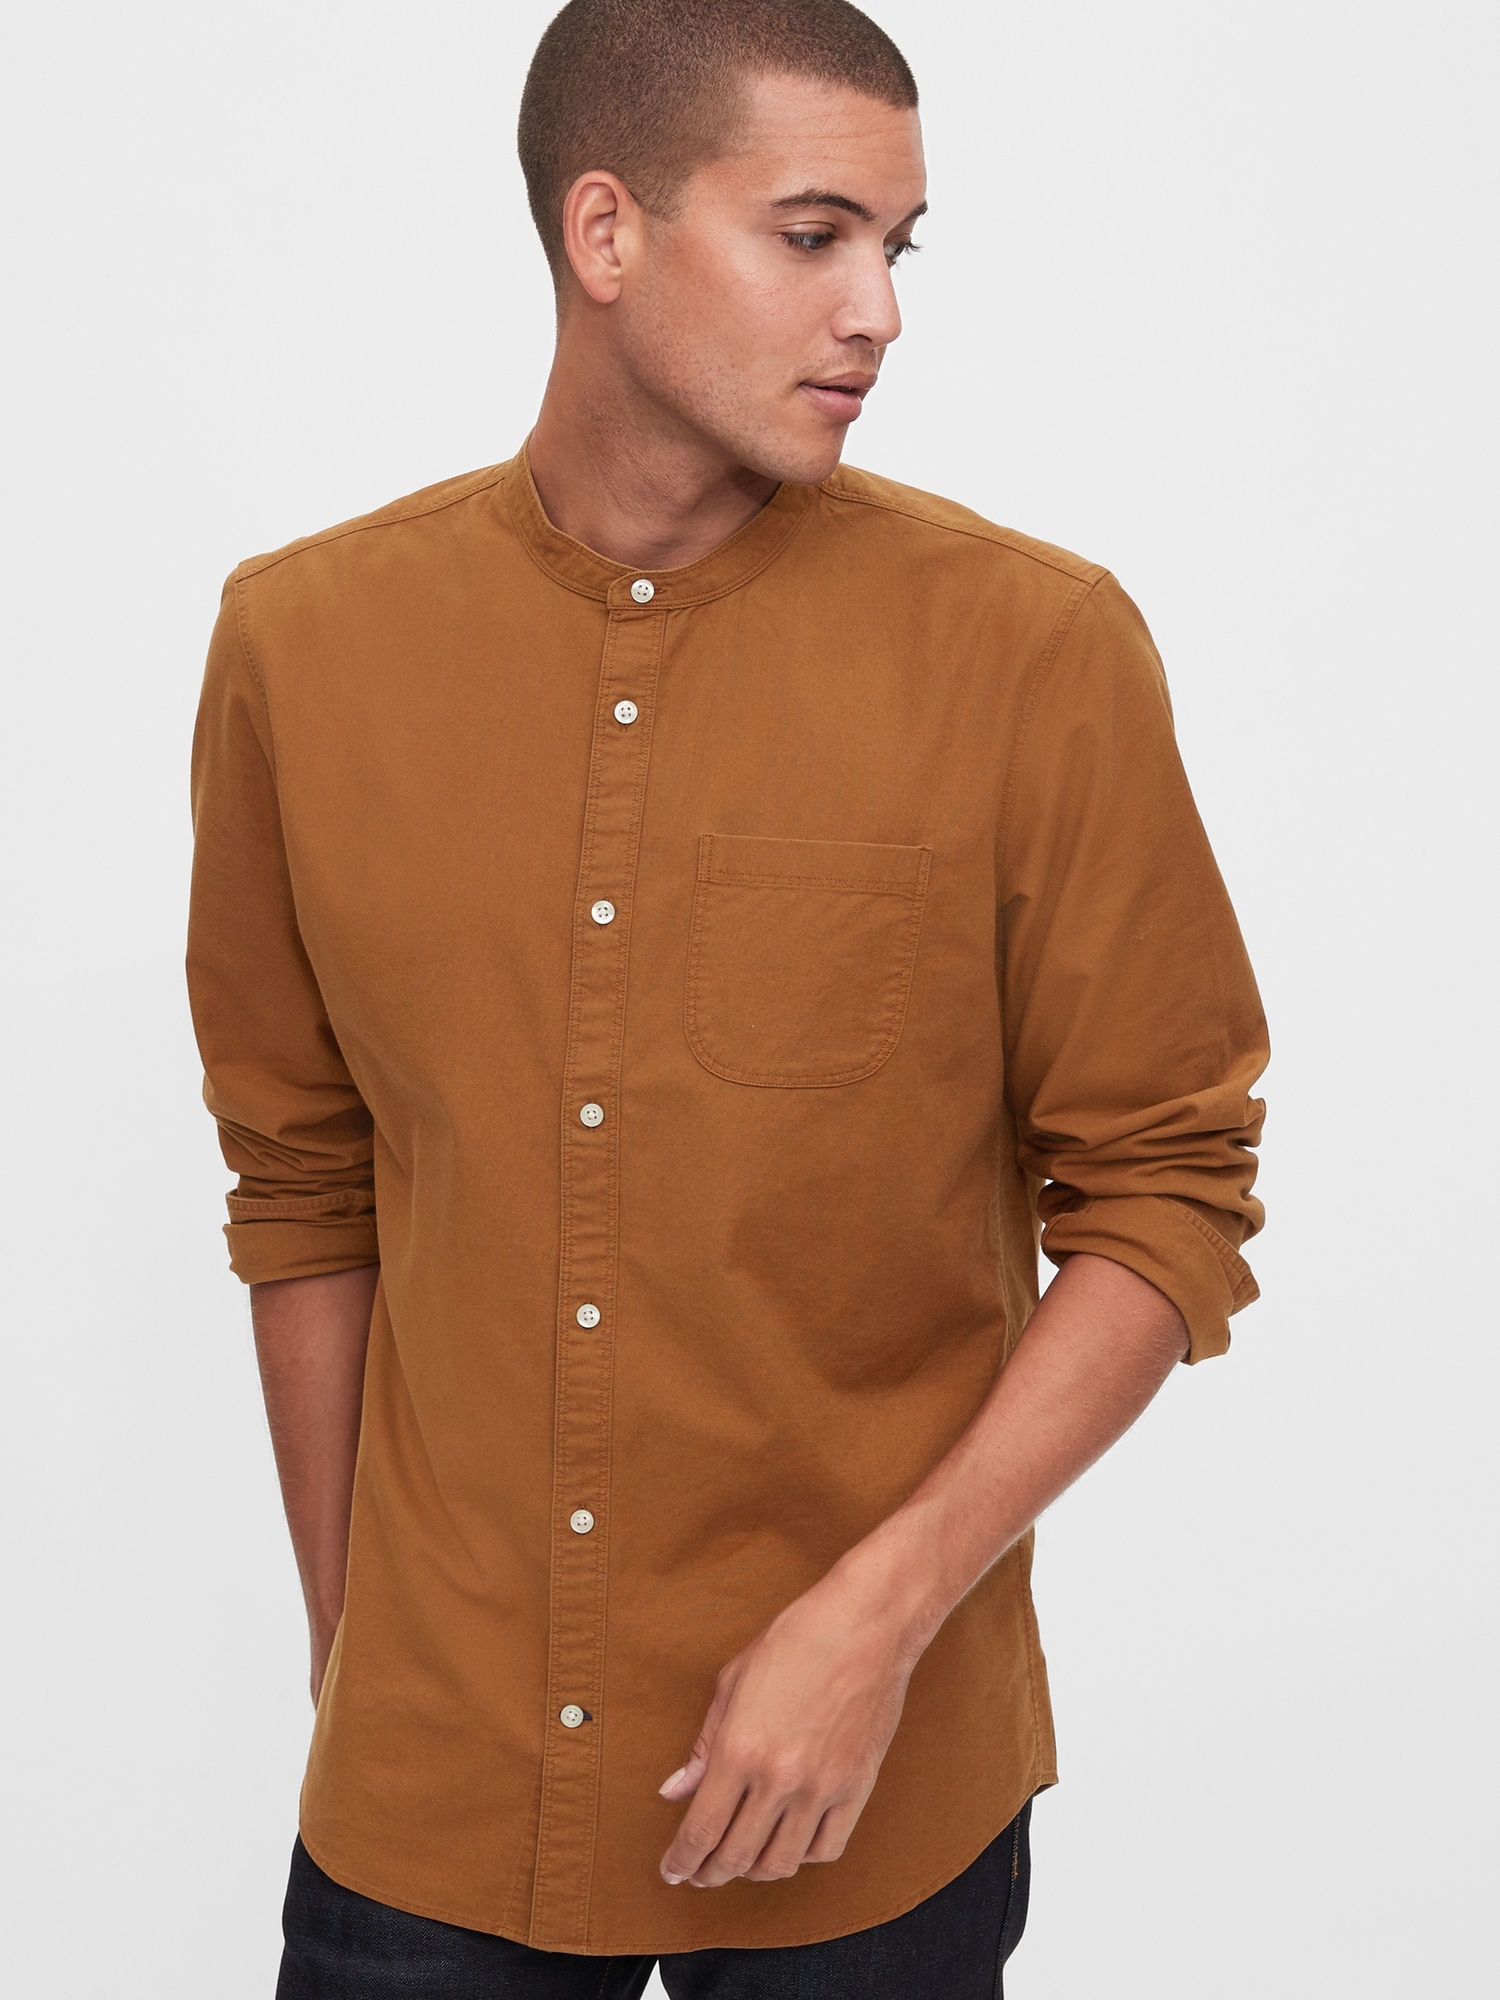 Greyish brown mandarin collar shirt by UNTUNG